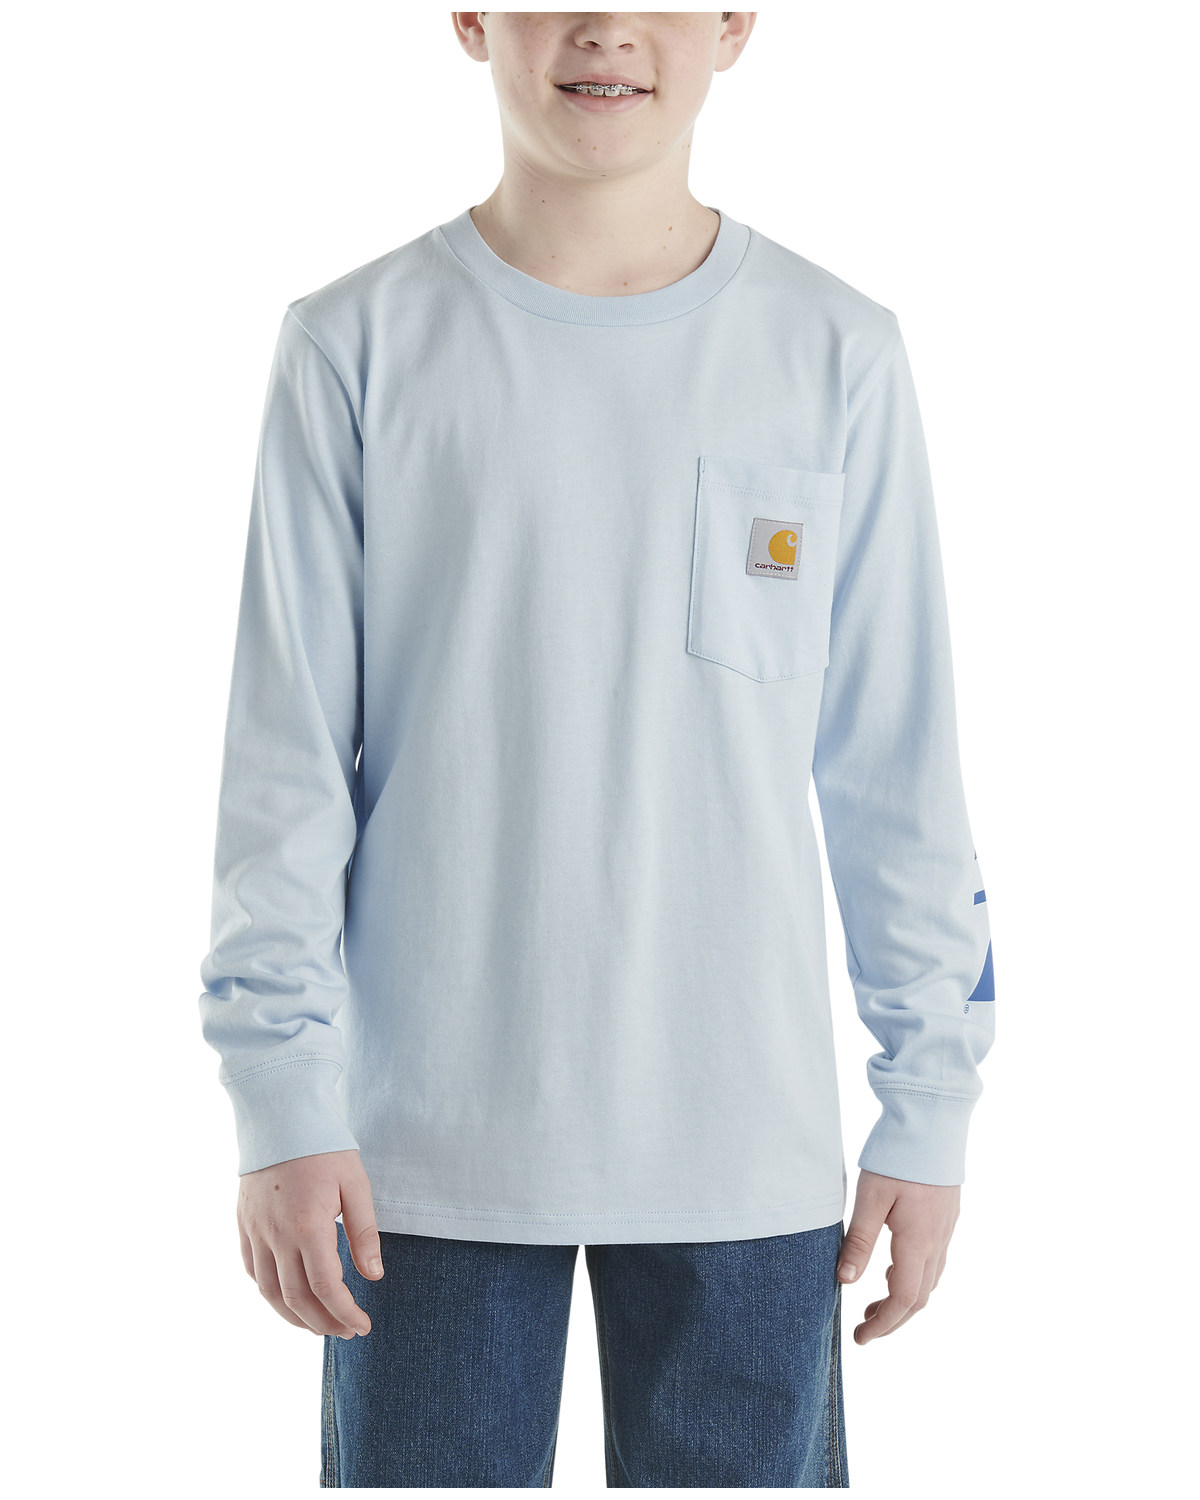 Carhartt Toddler Boys' Long Sleeve Pocket T-Shirt